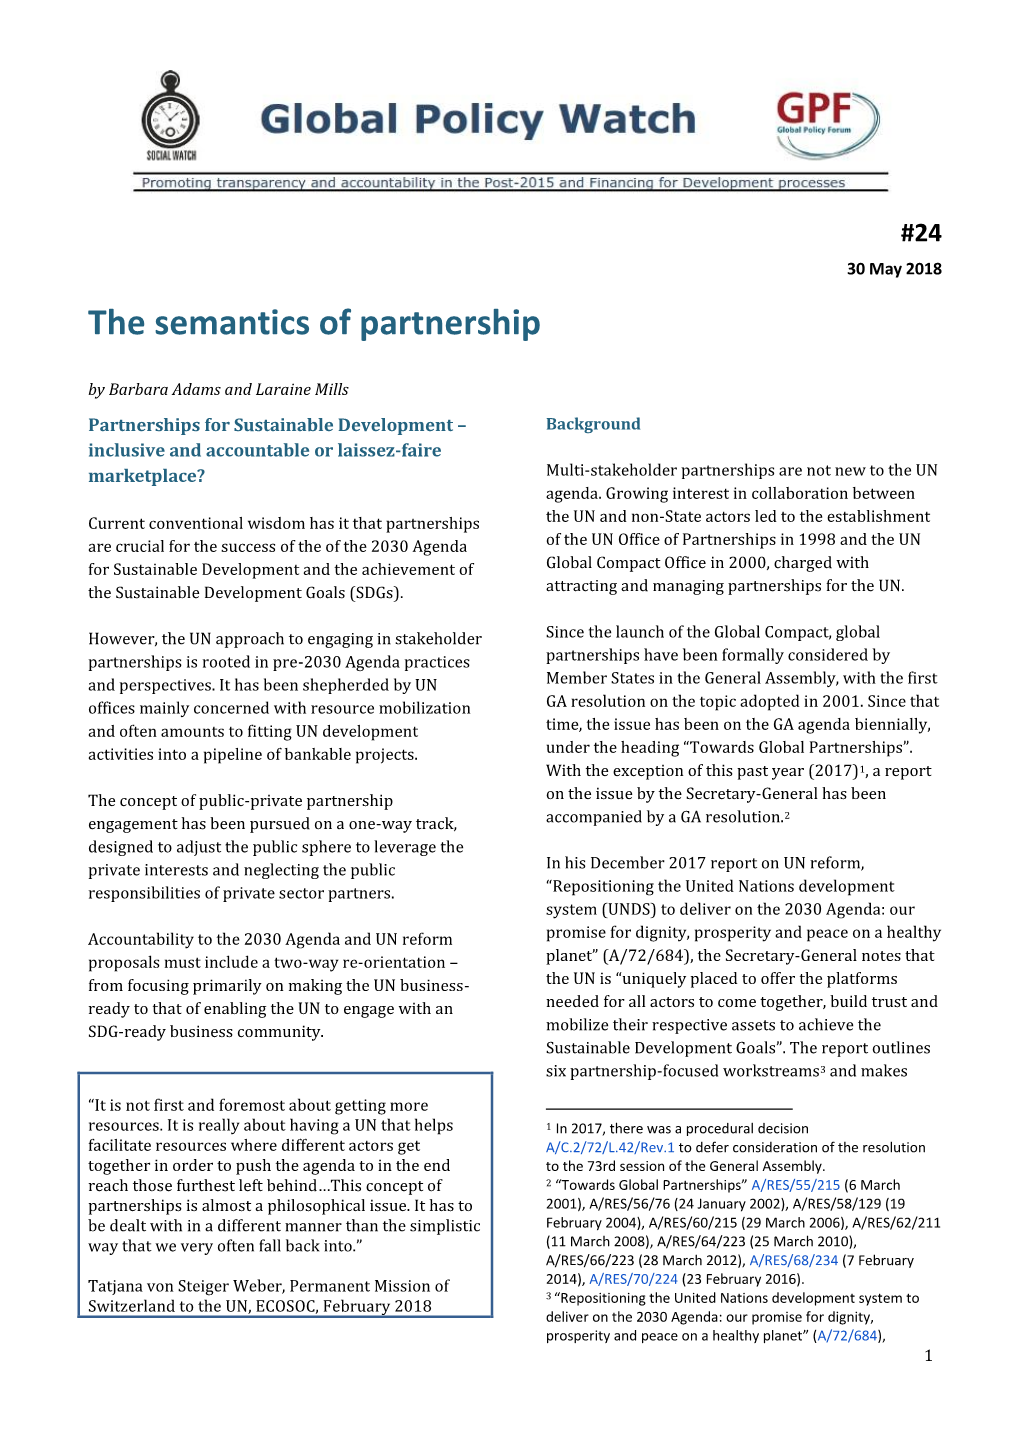 The Semantics of Partnership